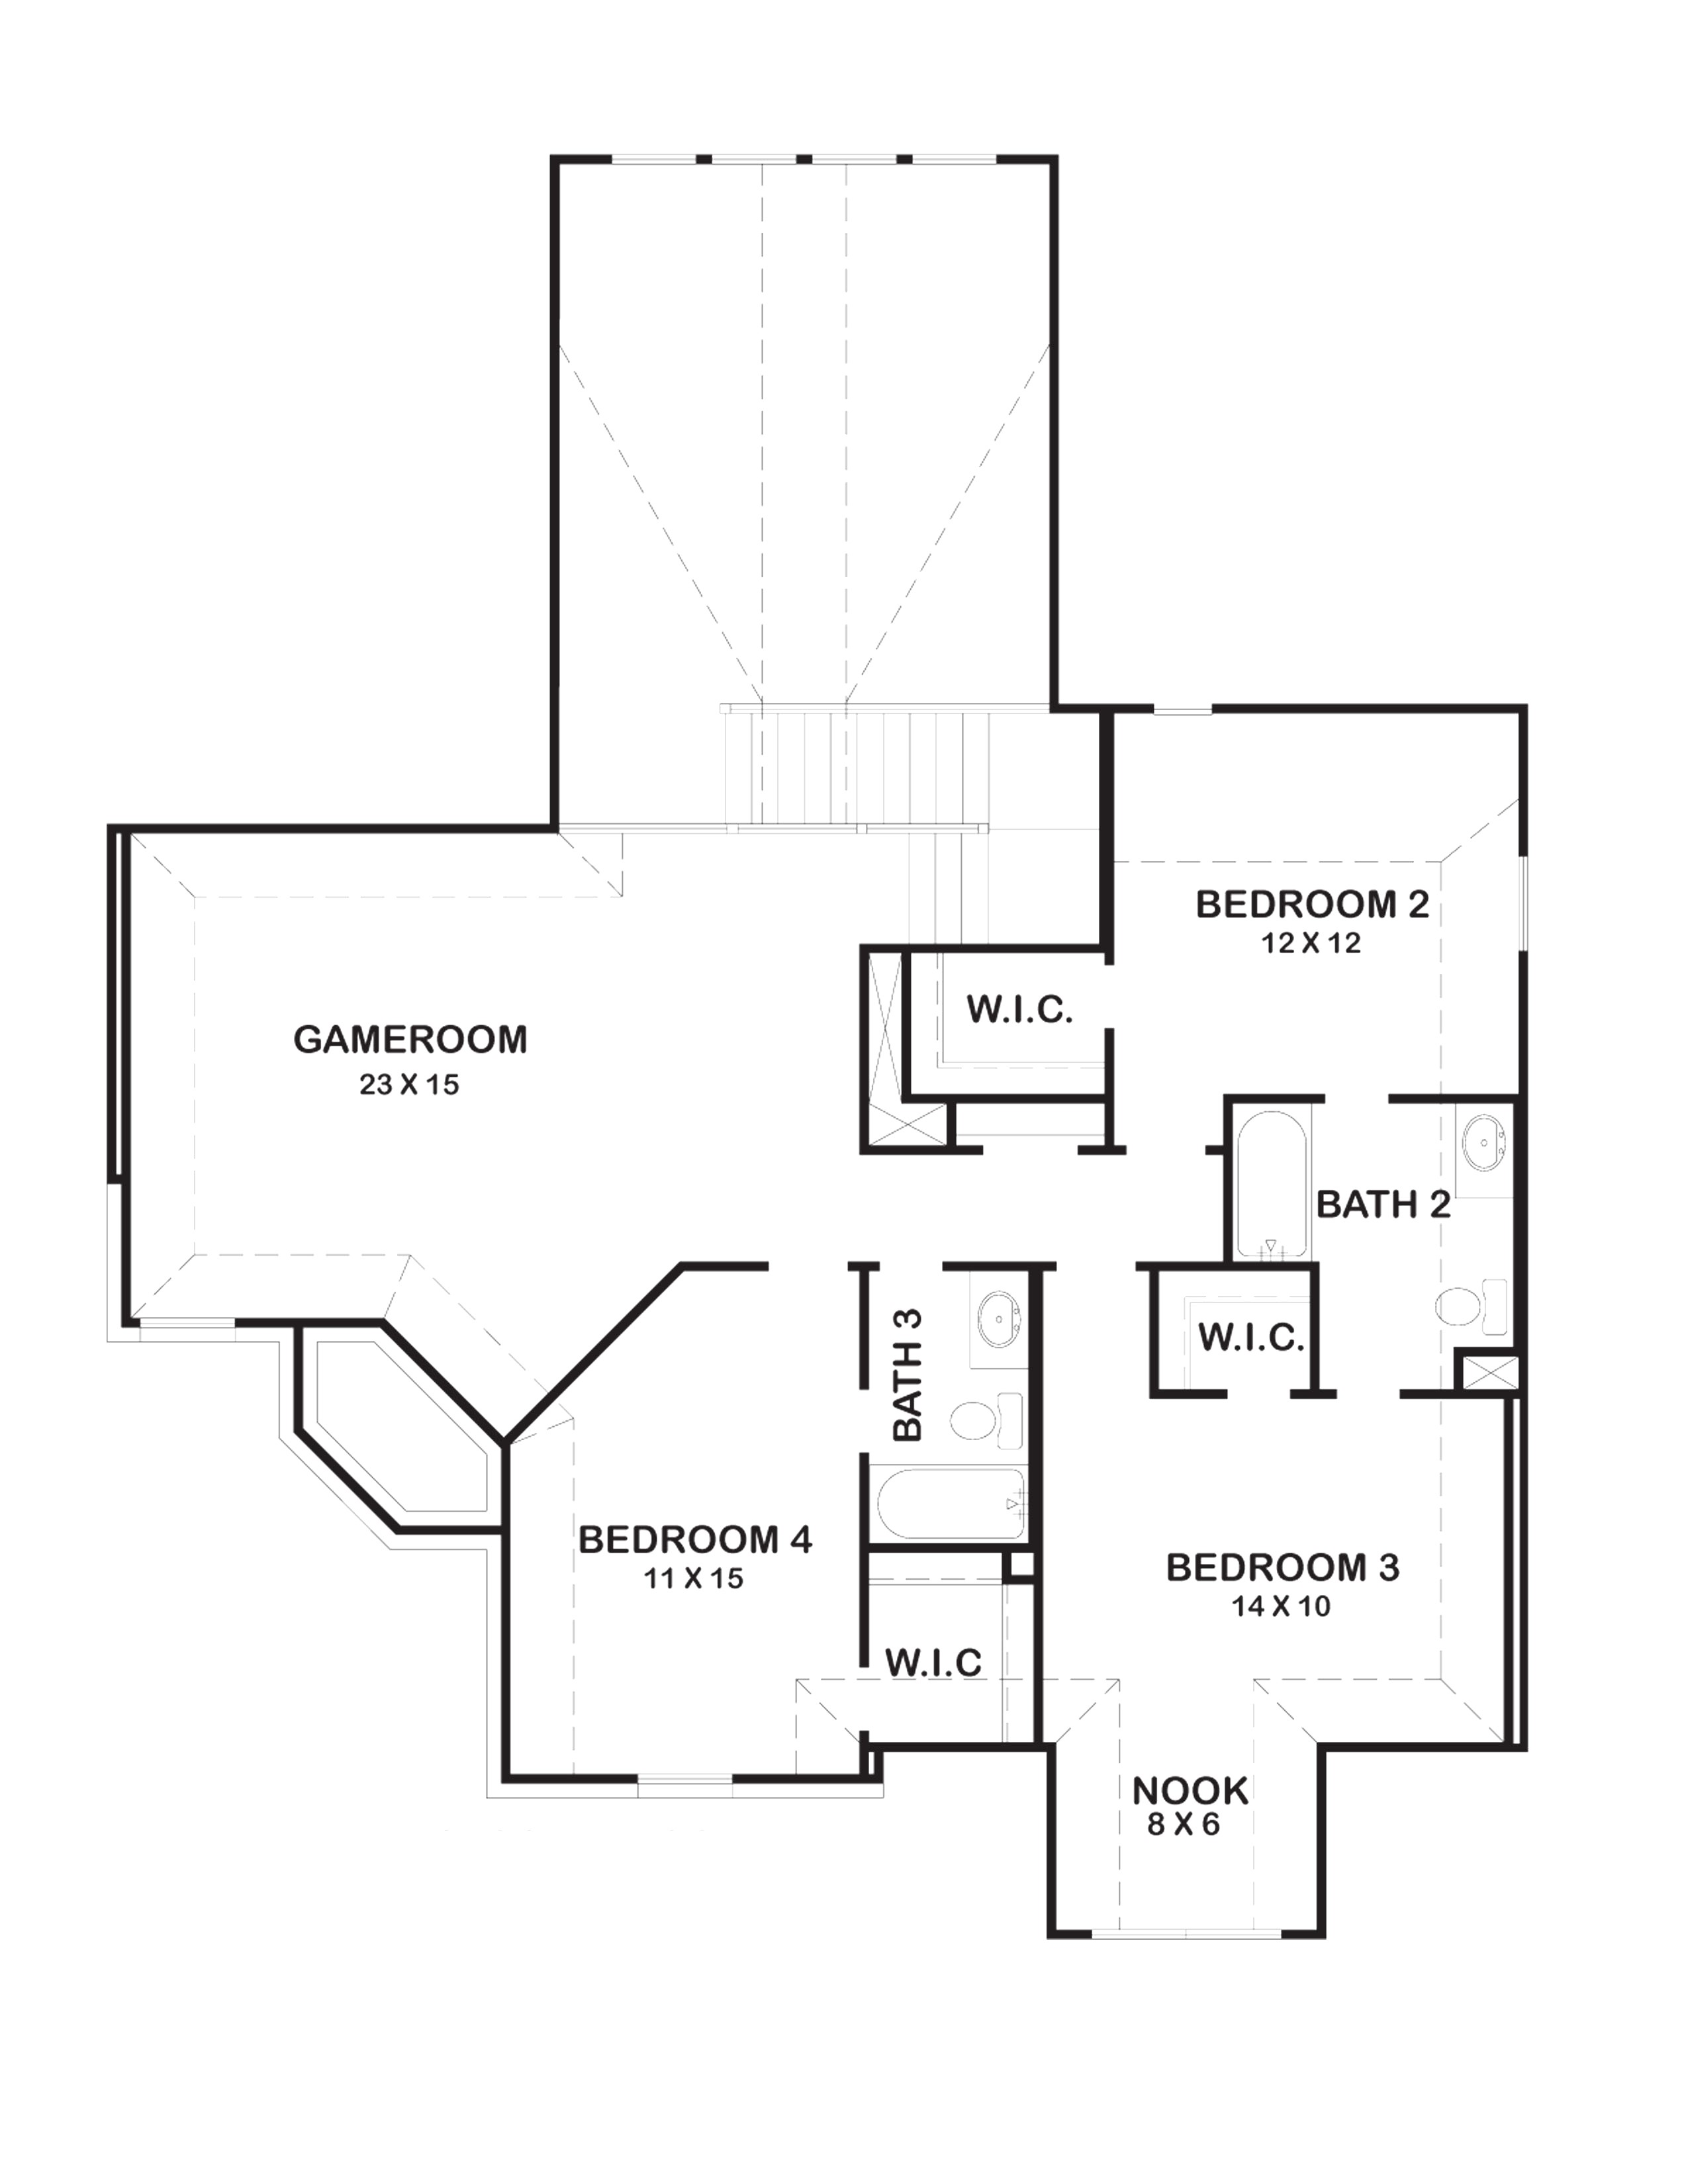 newmark homes magnolia floor plan